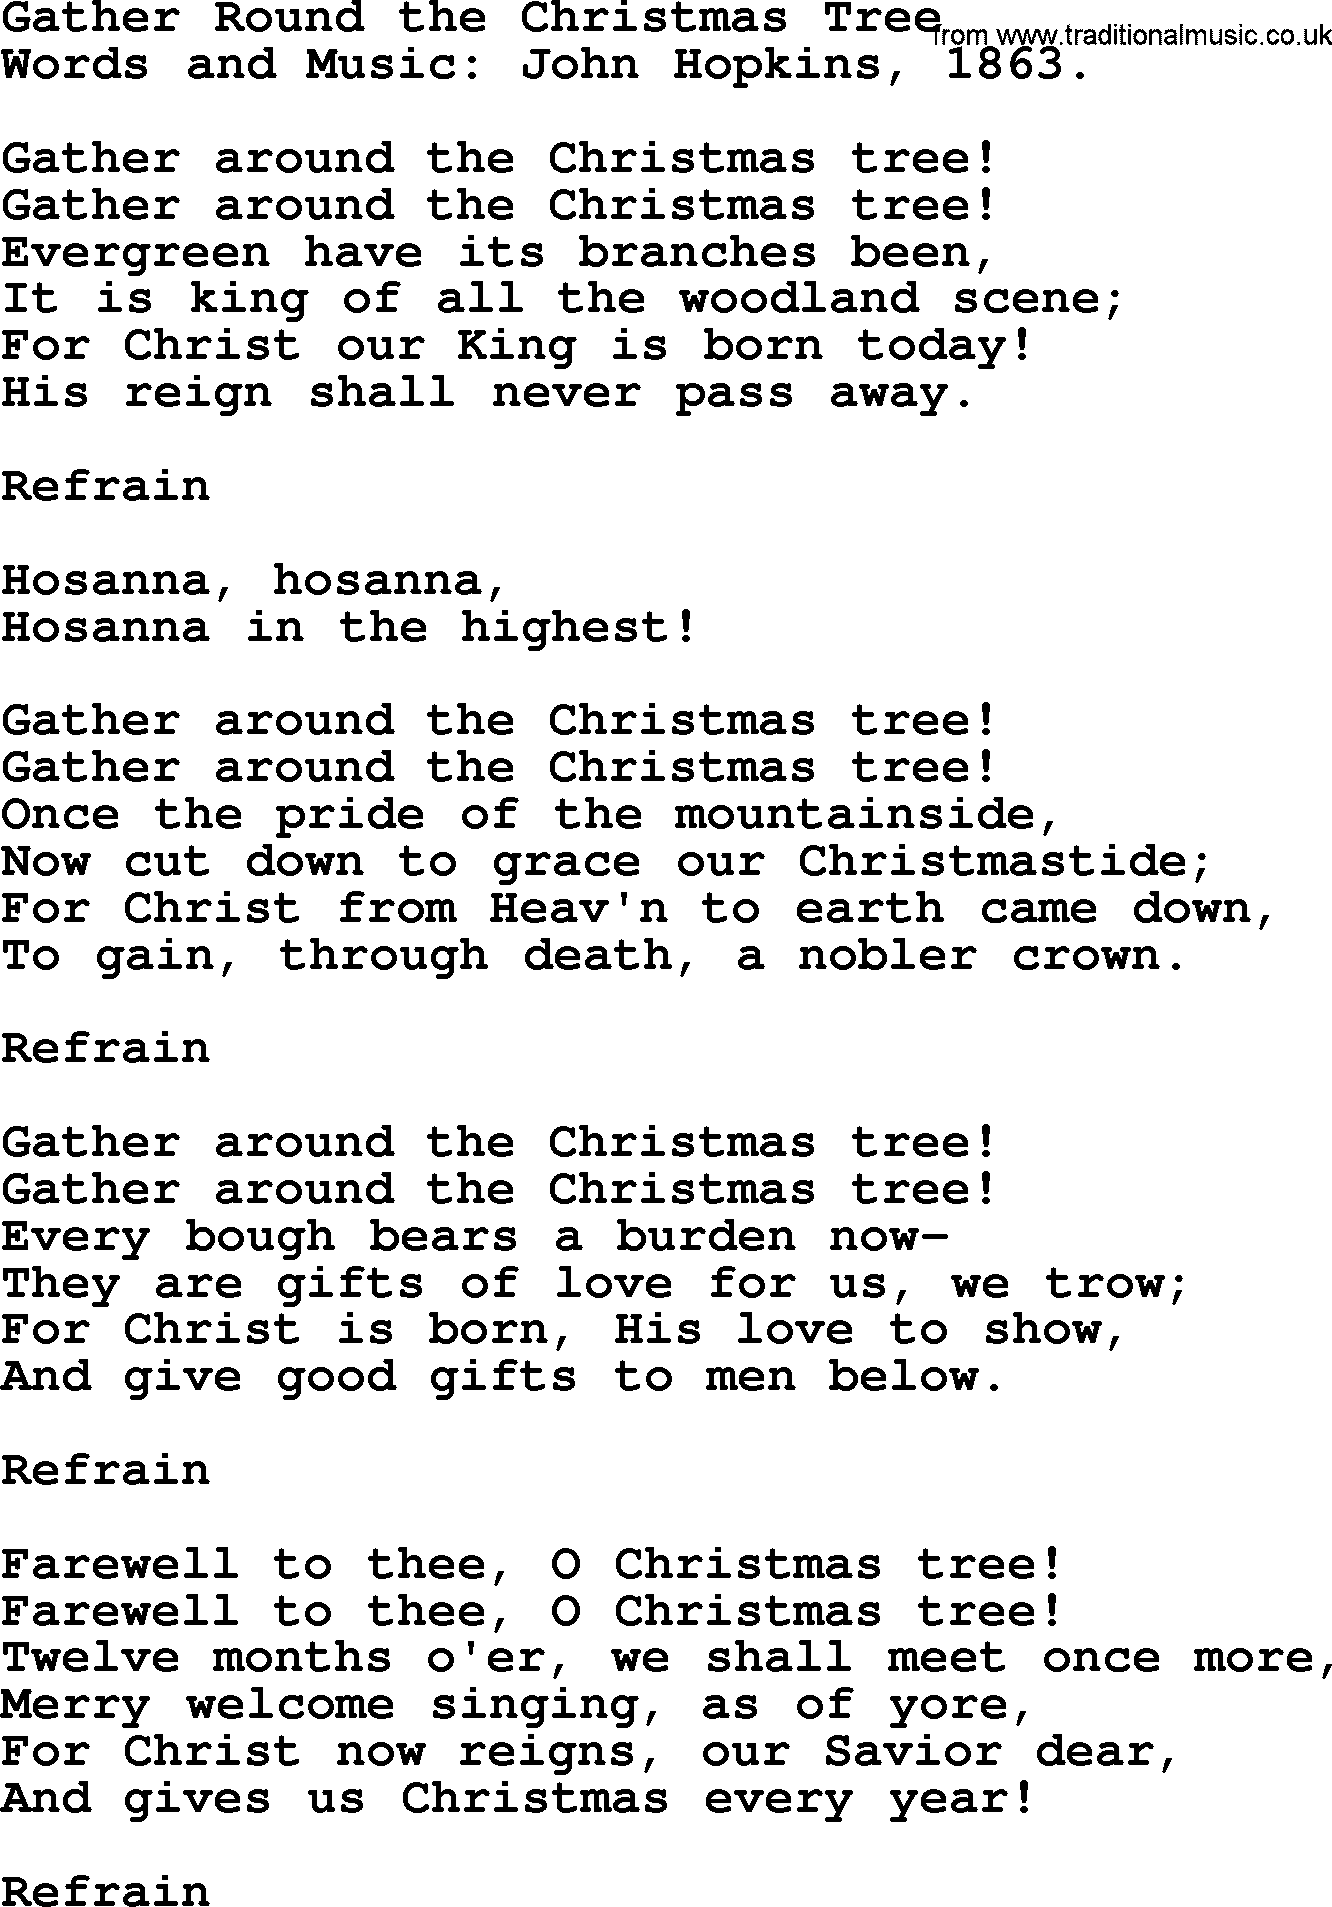 Christmas Hymns, Carols and Songs, title: Gather Round The Christmas Tree, lyrics with PDF